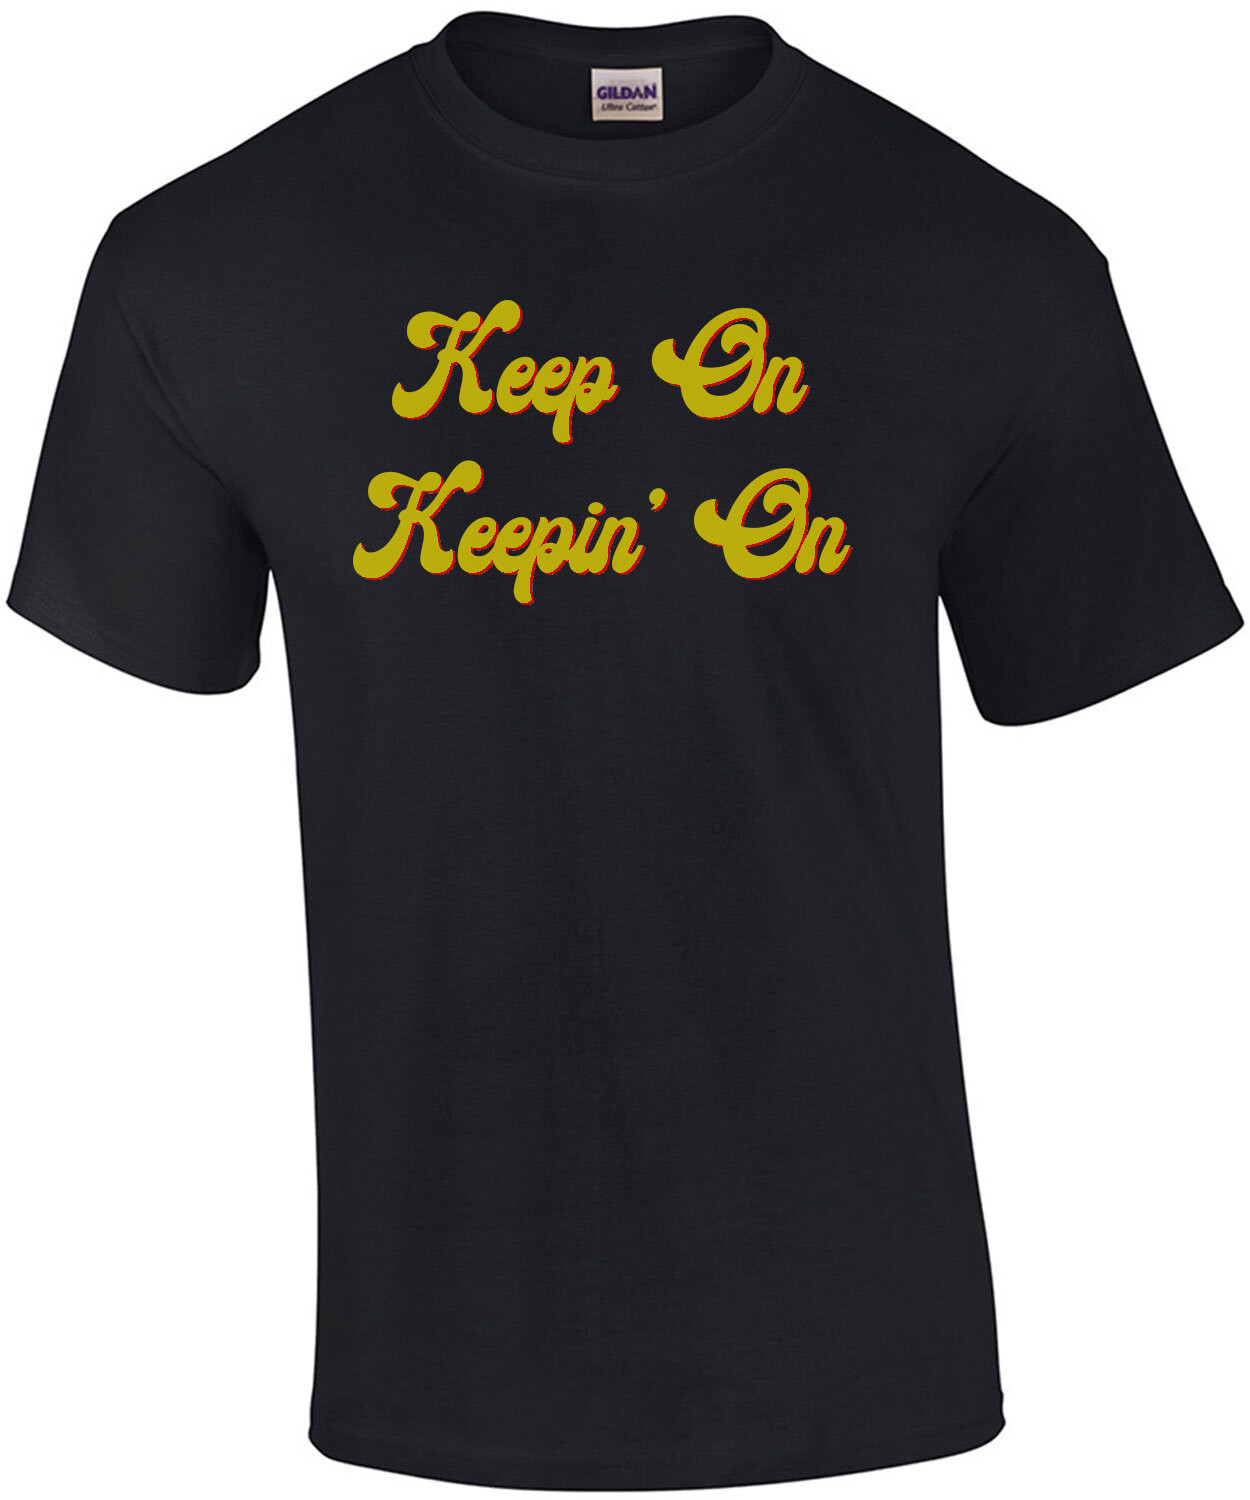 Keep on Keepin' on - cool t-shirt